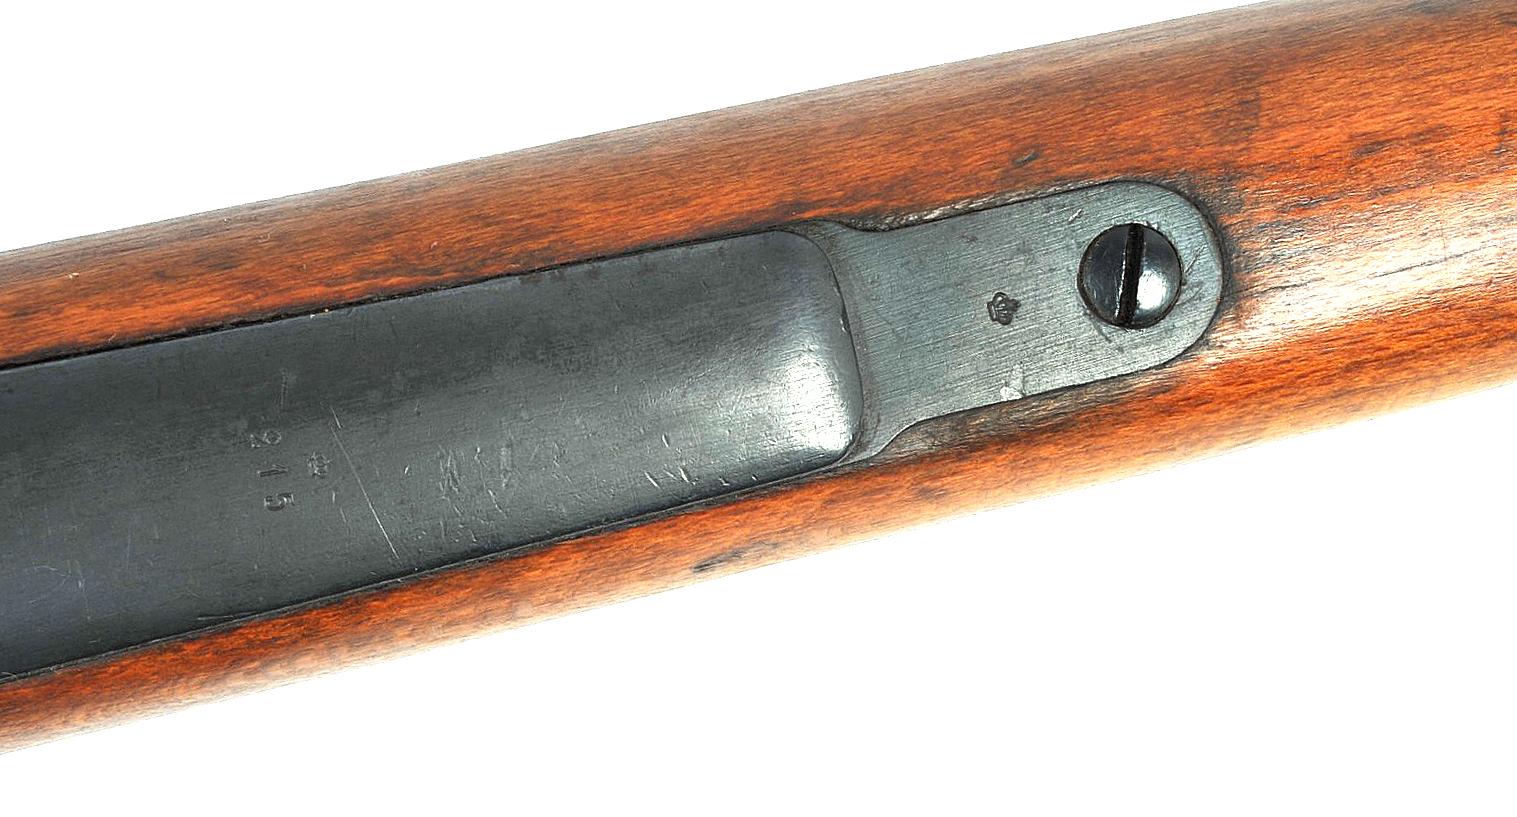 Swedish Military 1915-dated 6.5x55mm Mauser Bolt-Action Rifle - FFL #357180 (VDM1)